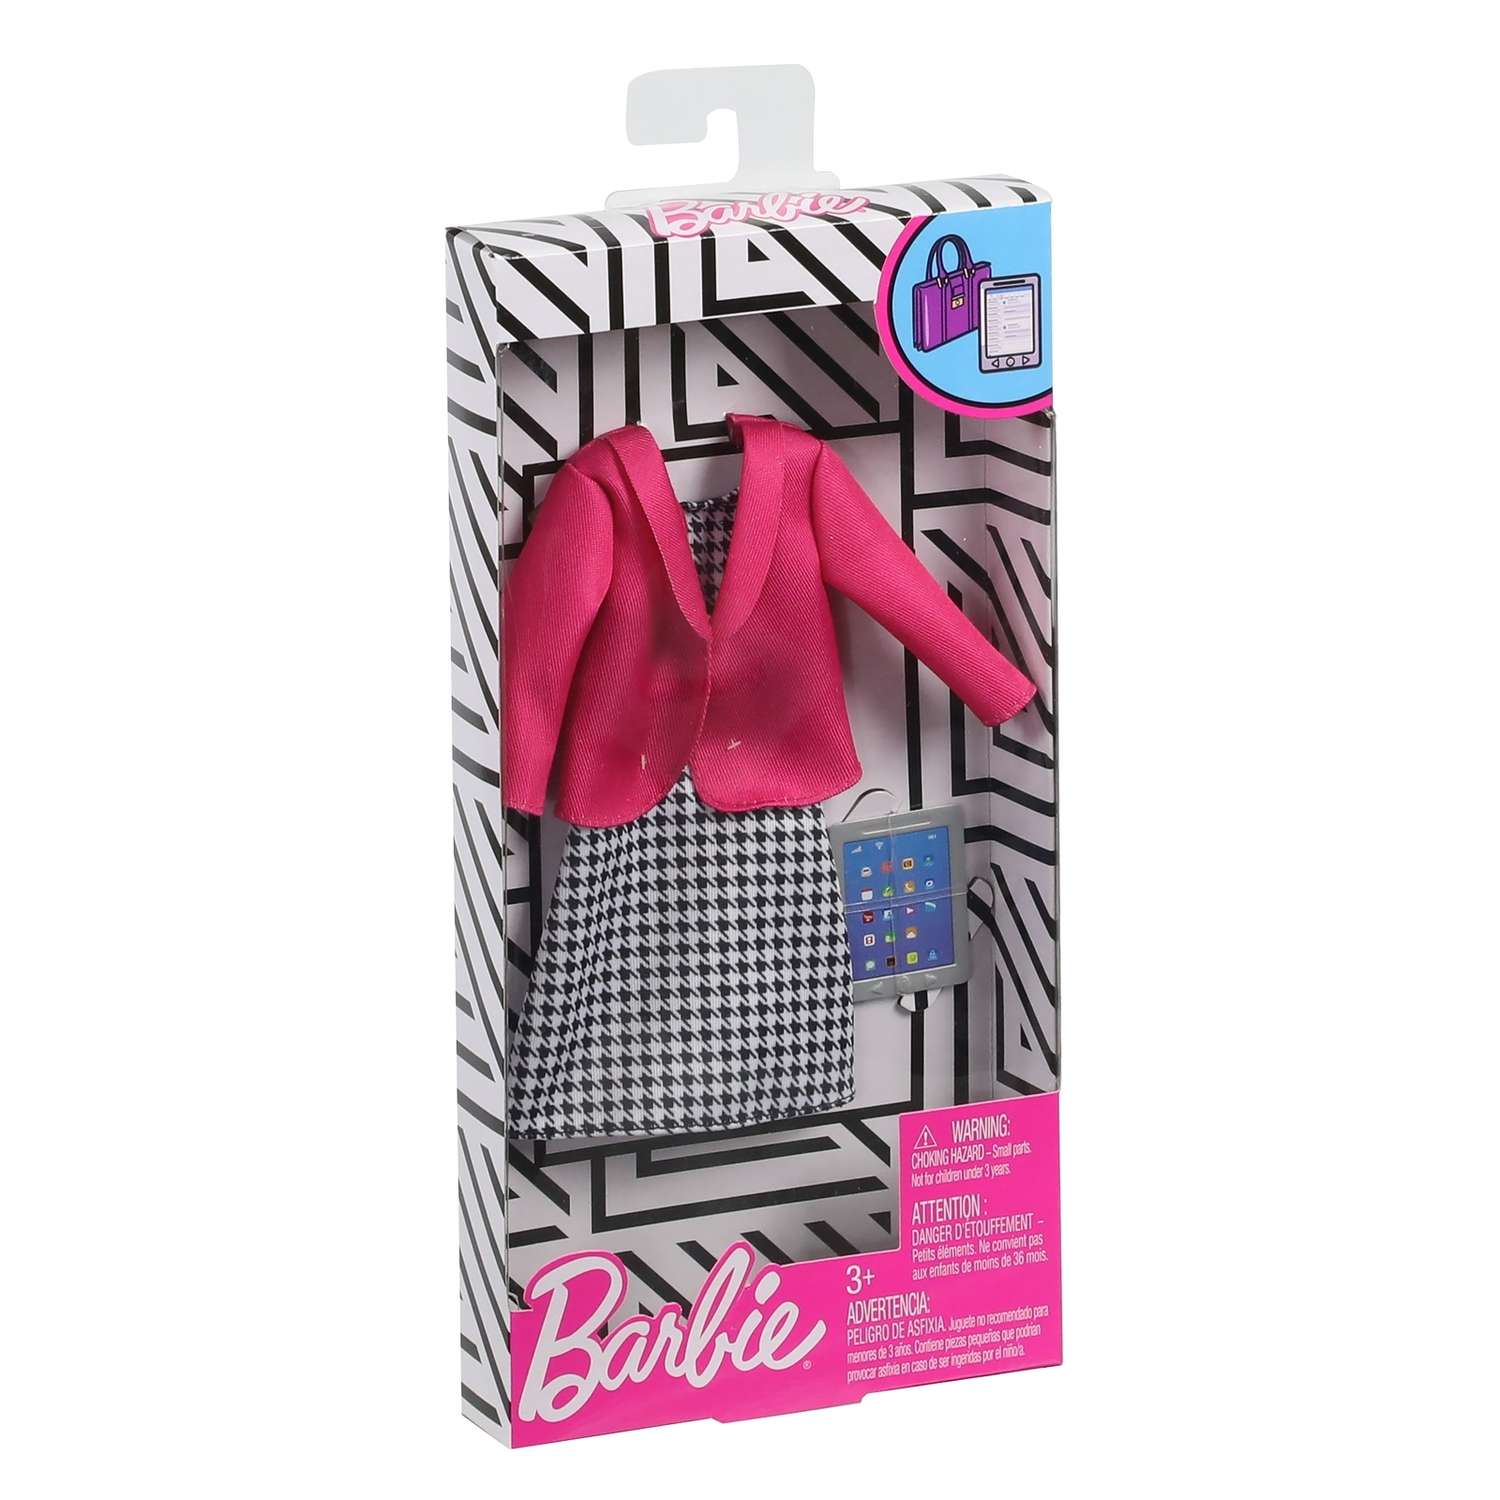 Одежда для куклы Barbie Кем быть Бизнес-леди GHX40 FND49 - фото 3